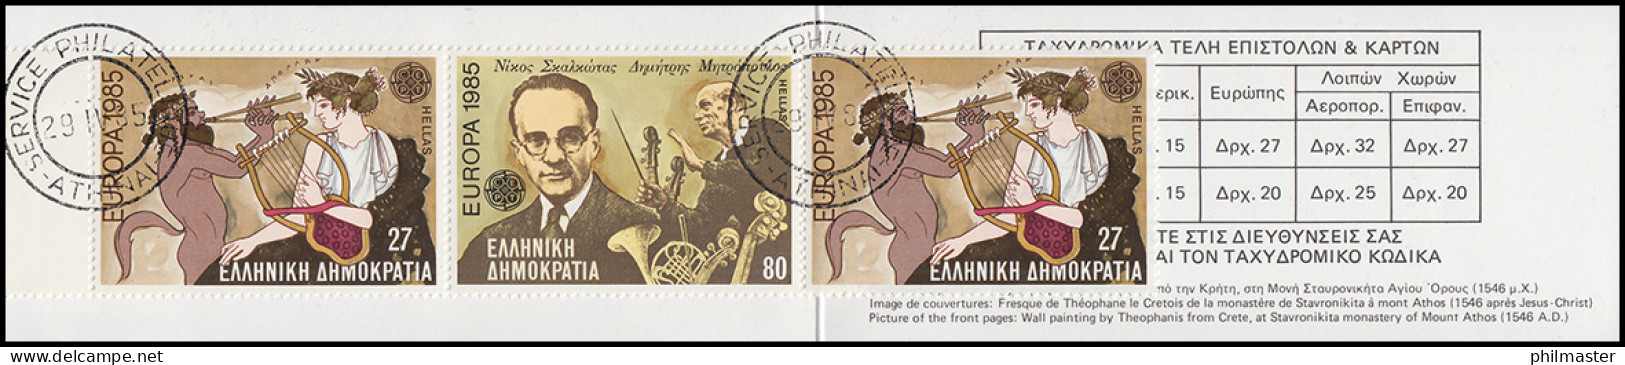 Griechenland Markenheftchen 4 Europa 1985, Ersttagsstempel ATHEN 29.4.85 - Postzegelboekjes